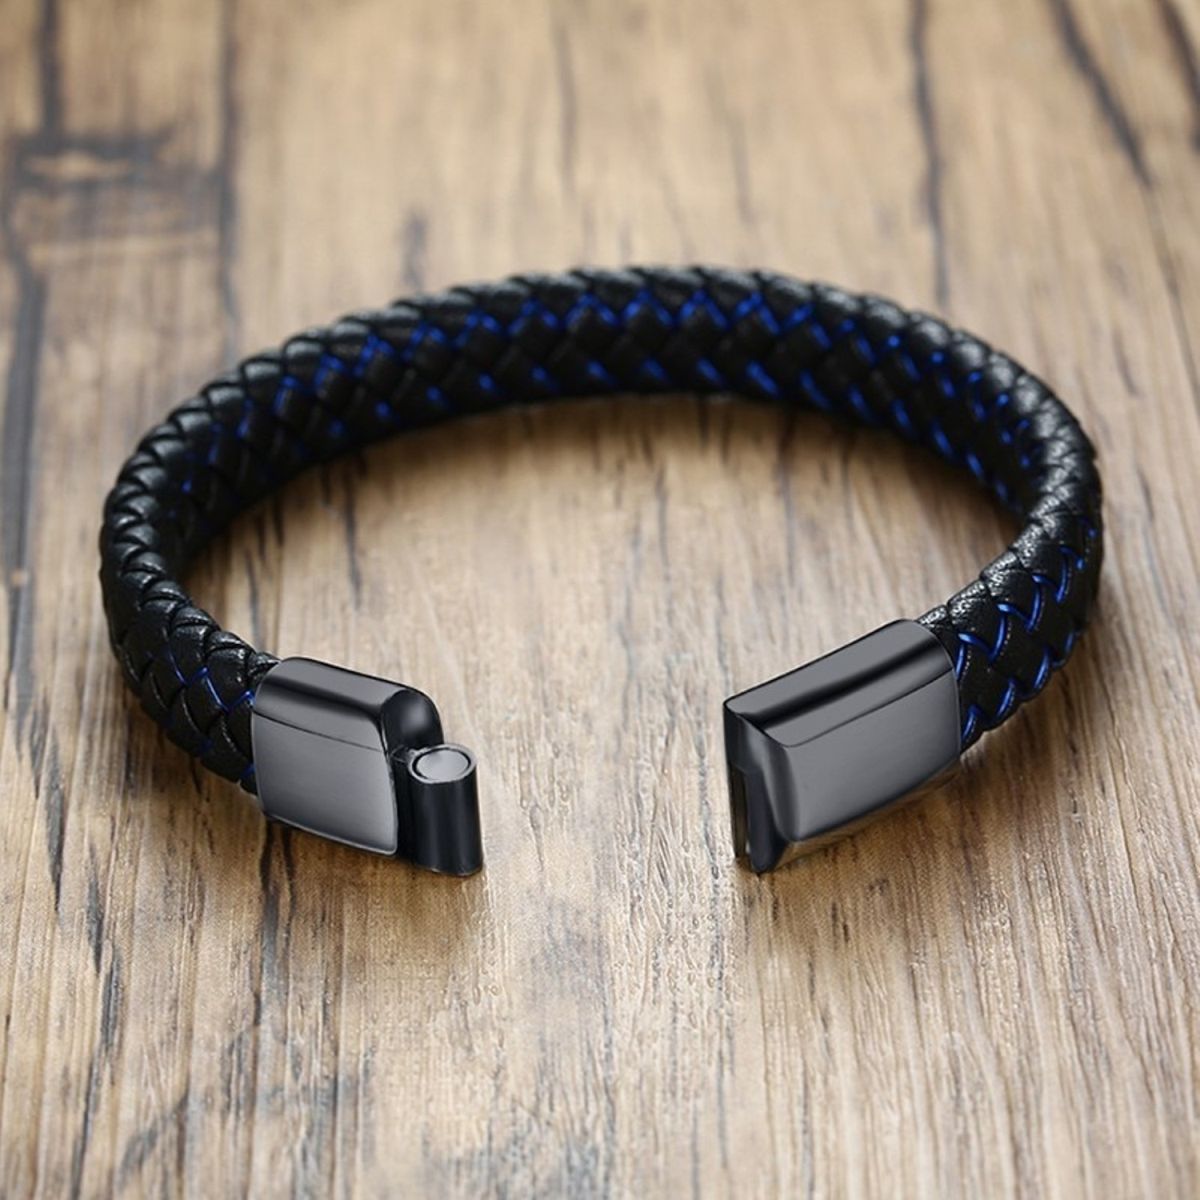 Braided Blue Black Leather Stainless Steel Wrist Band Bracelet Men